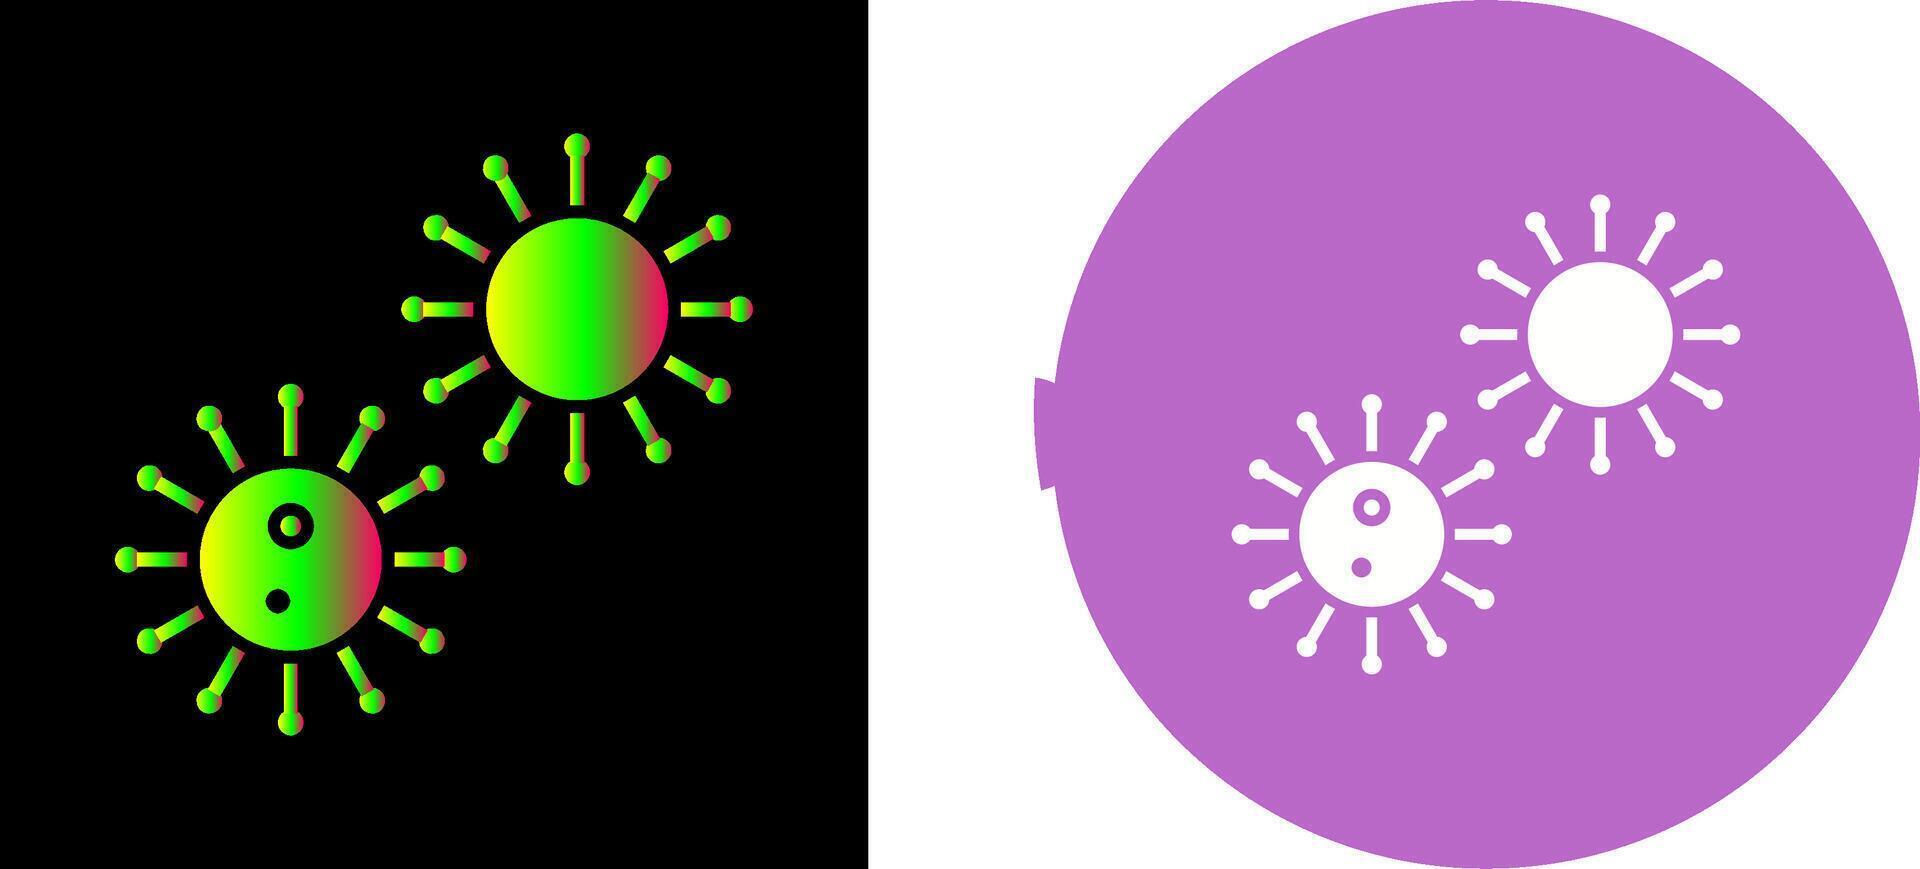 Unique Virus Icon Design vector